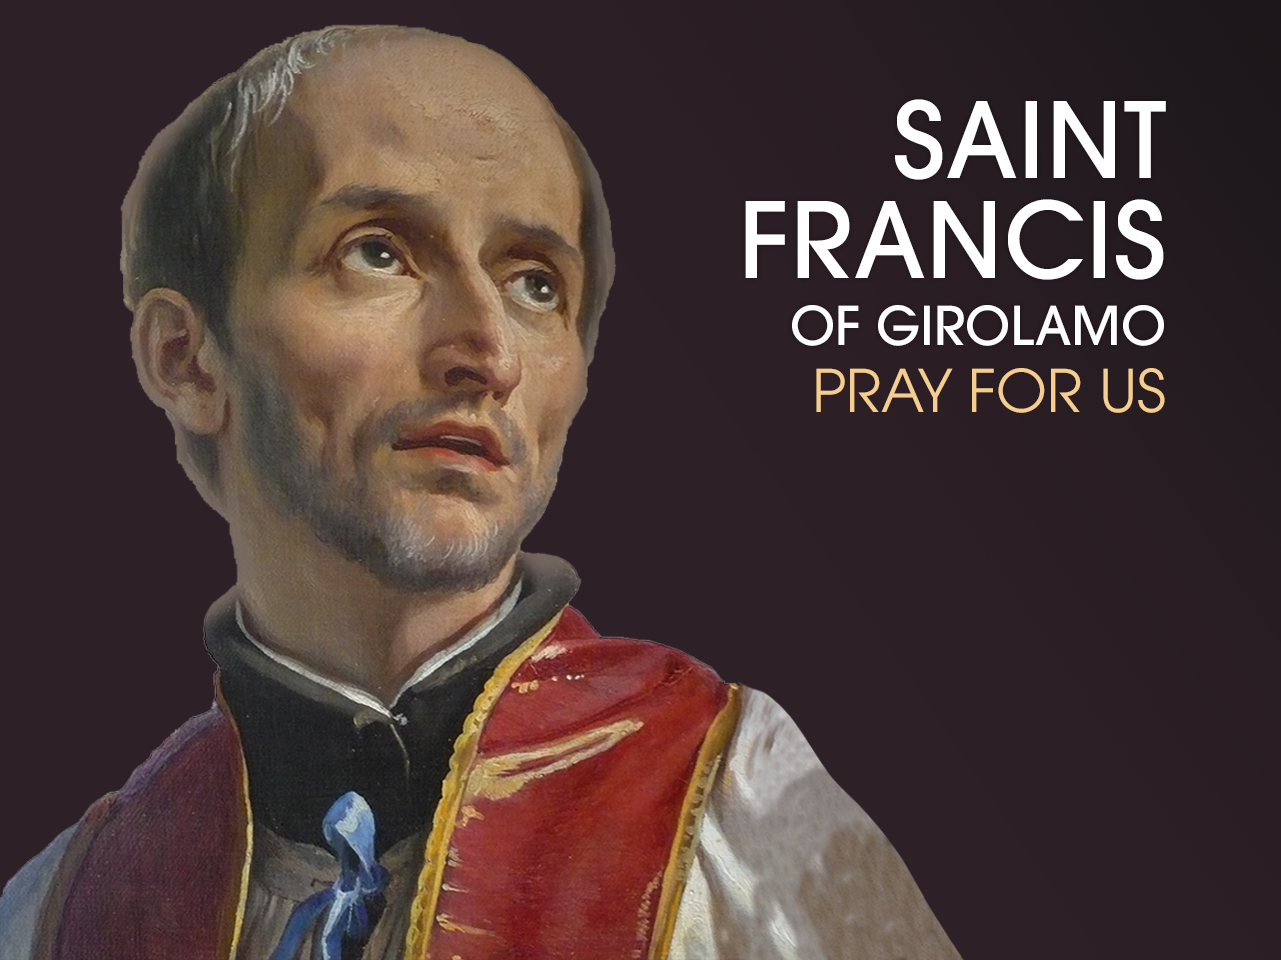 St. Francis of Girolamo